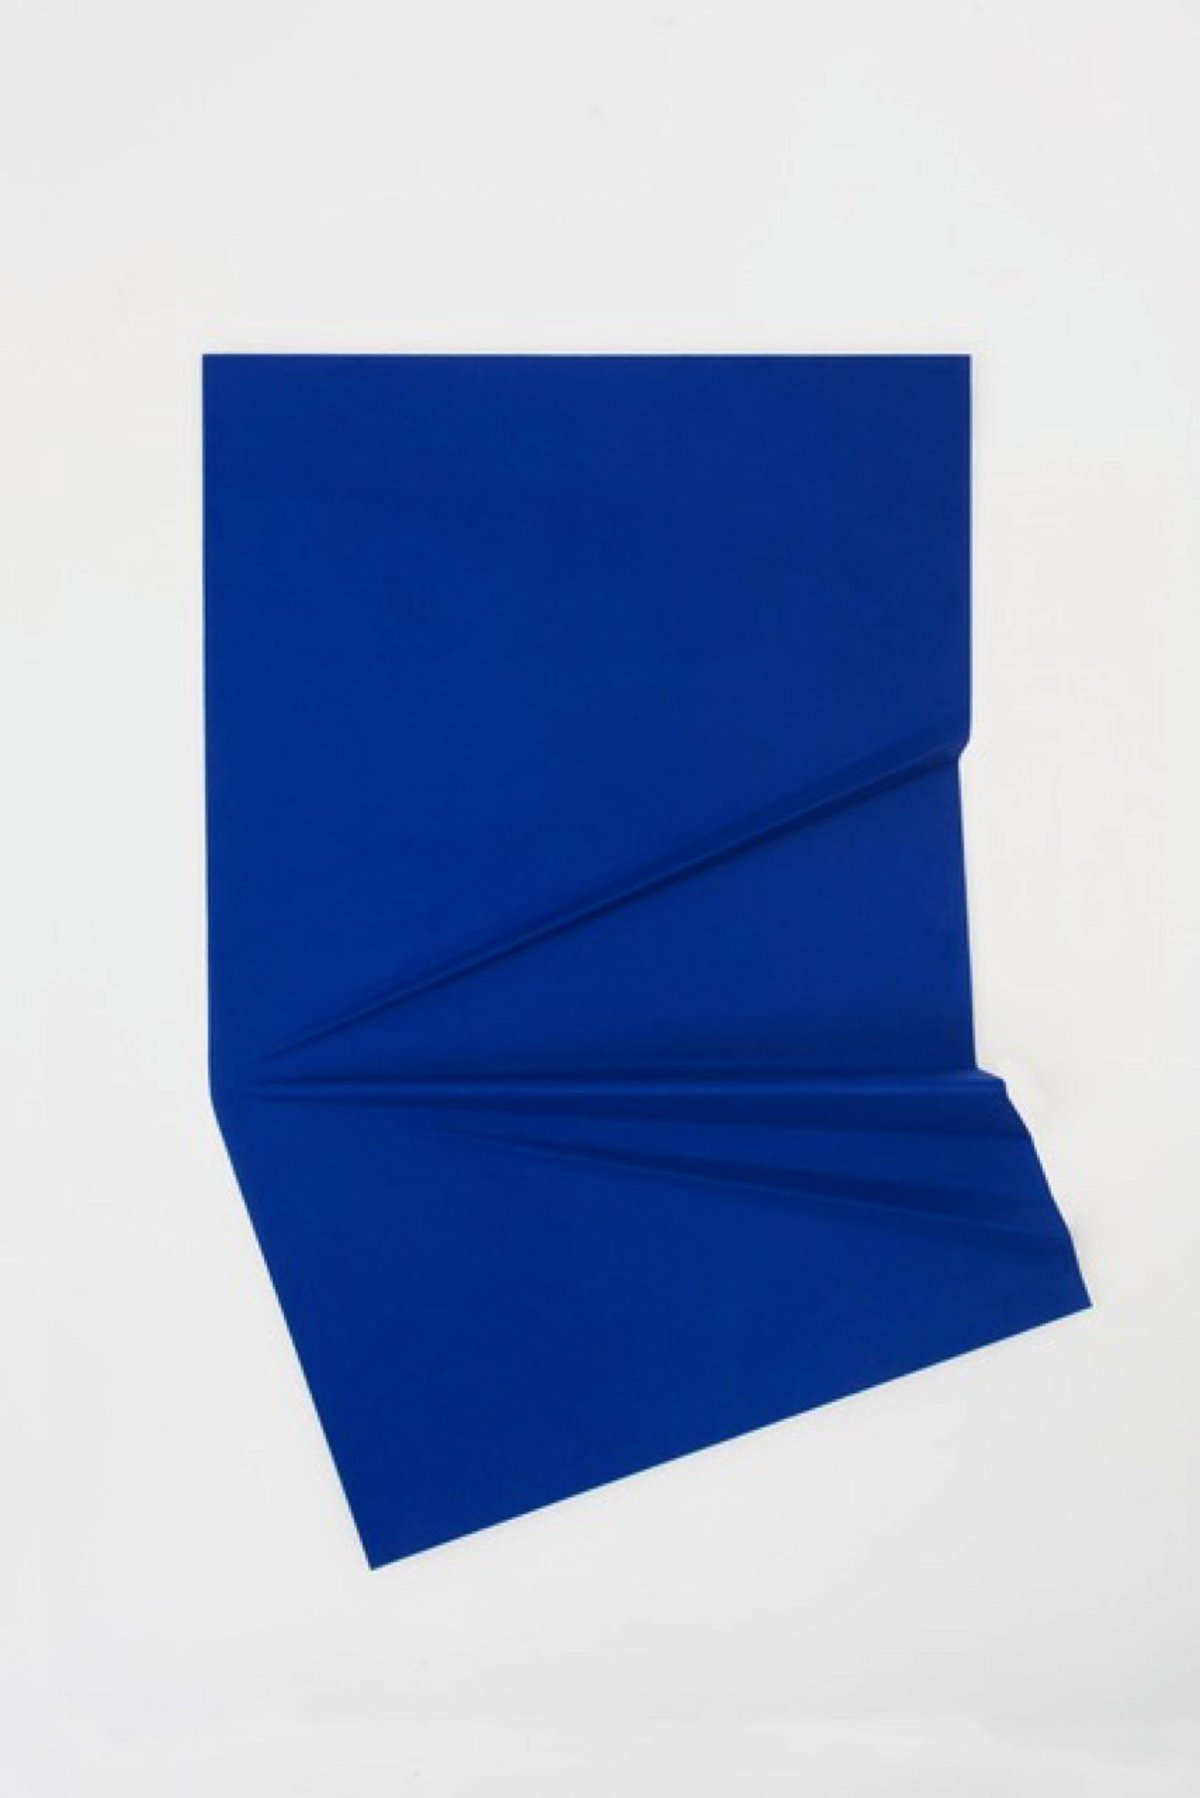 Robert StadlerPli, 2014Kvadrat Divina 3 fabric, glass fiber, polyester resin154 x 113 x 15.5 cm